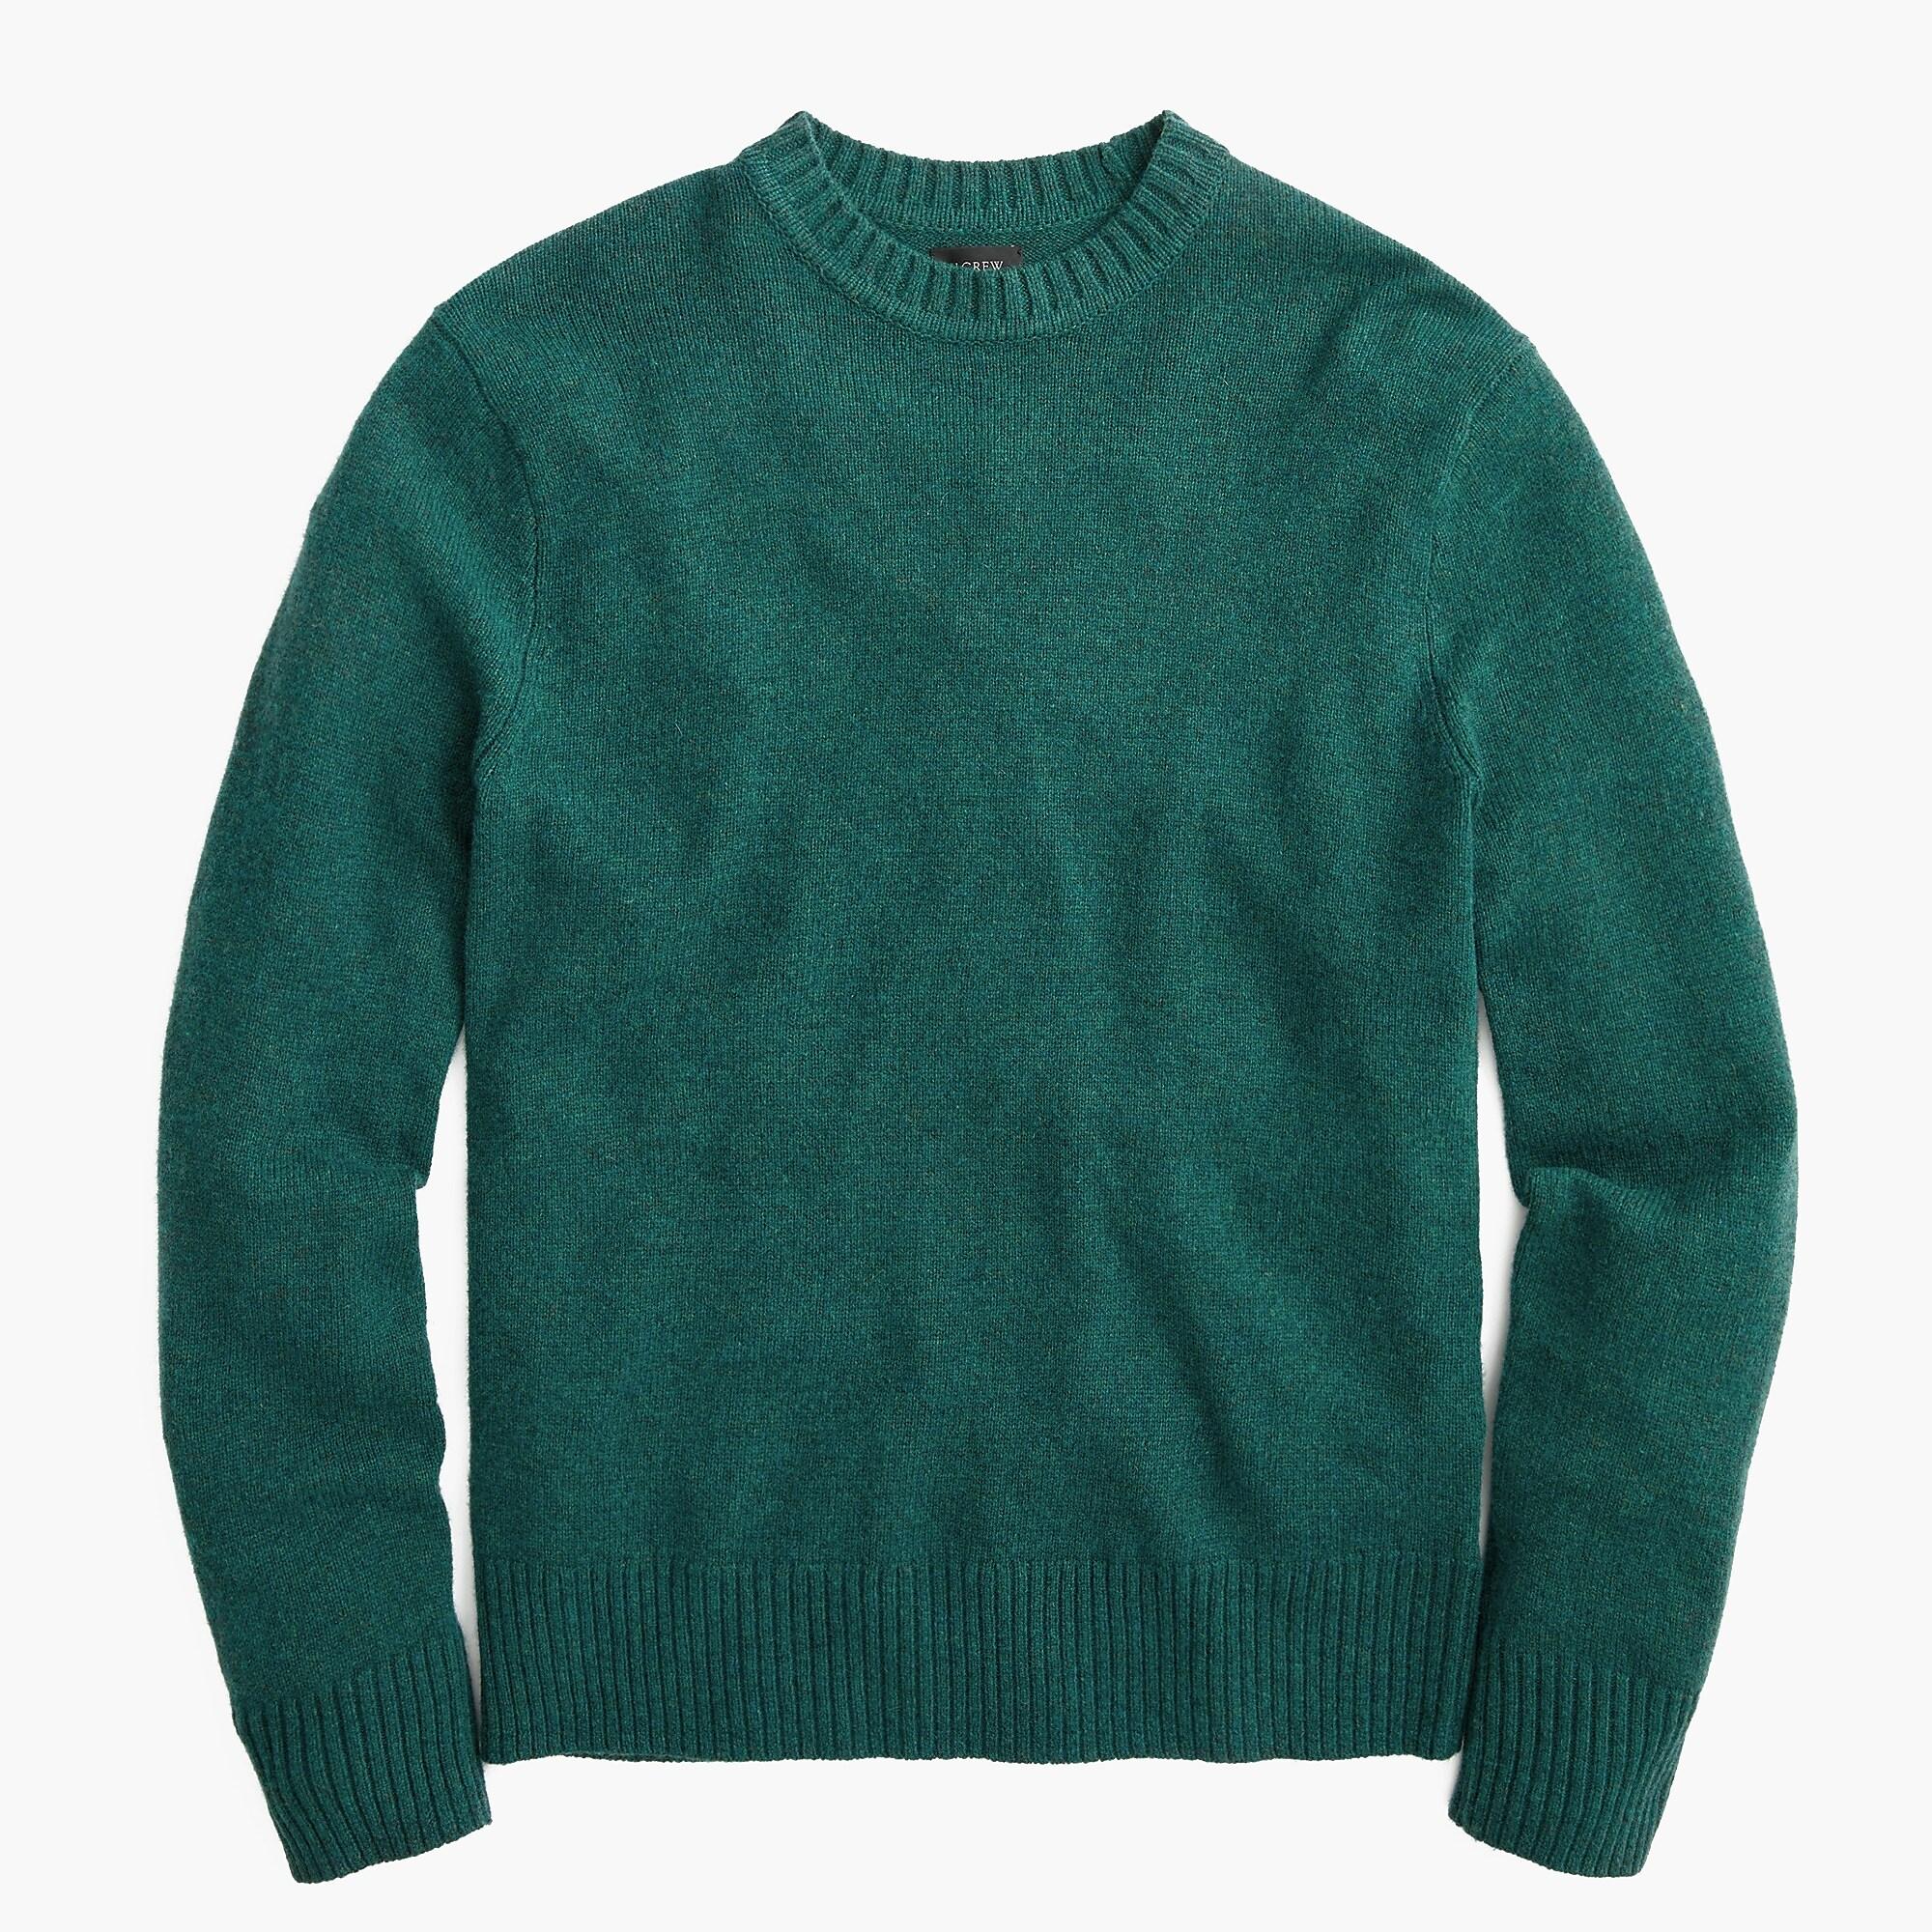 J.Crew Rugged Merino Wool Heather Crewneck Sweater in Green for Men - Lyst